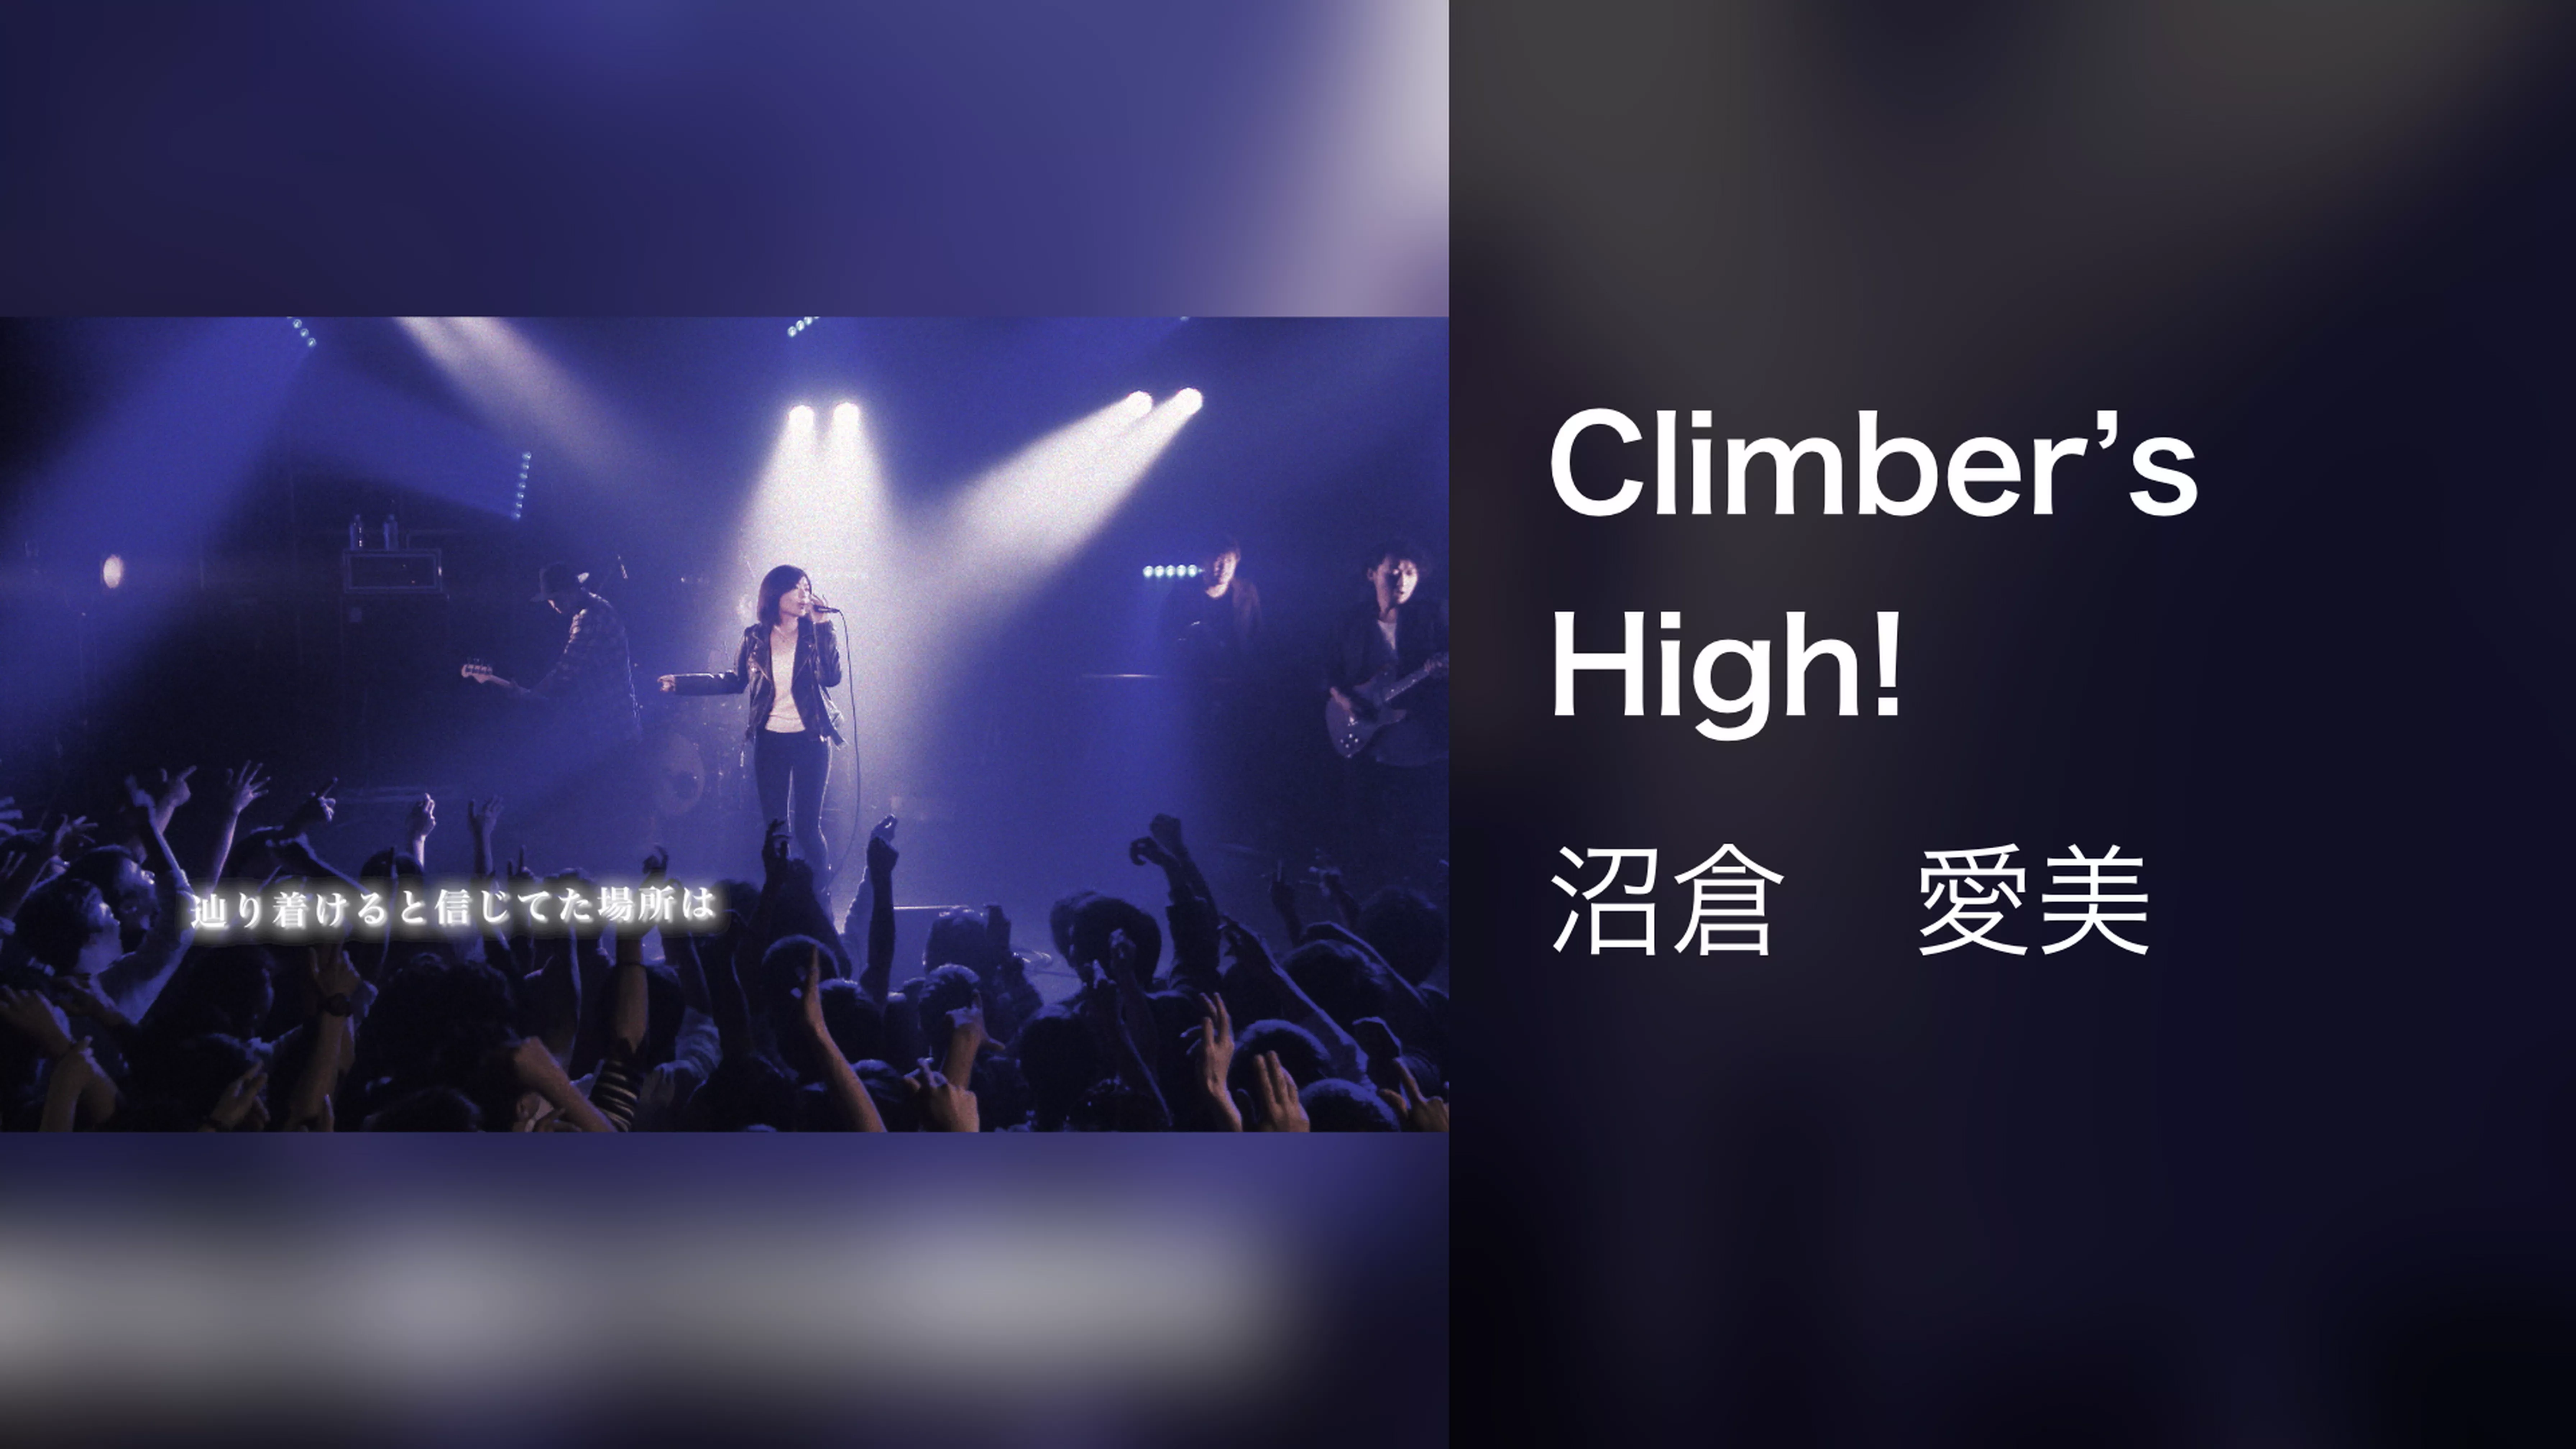 Climber's High!